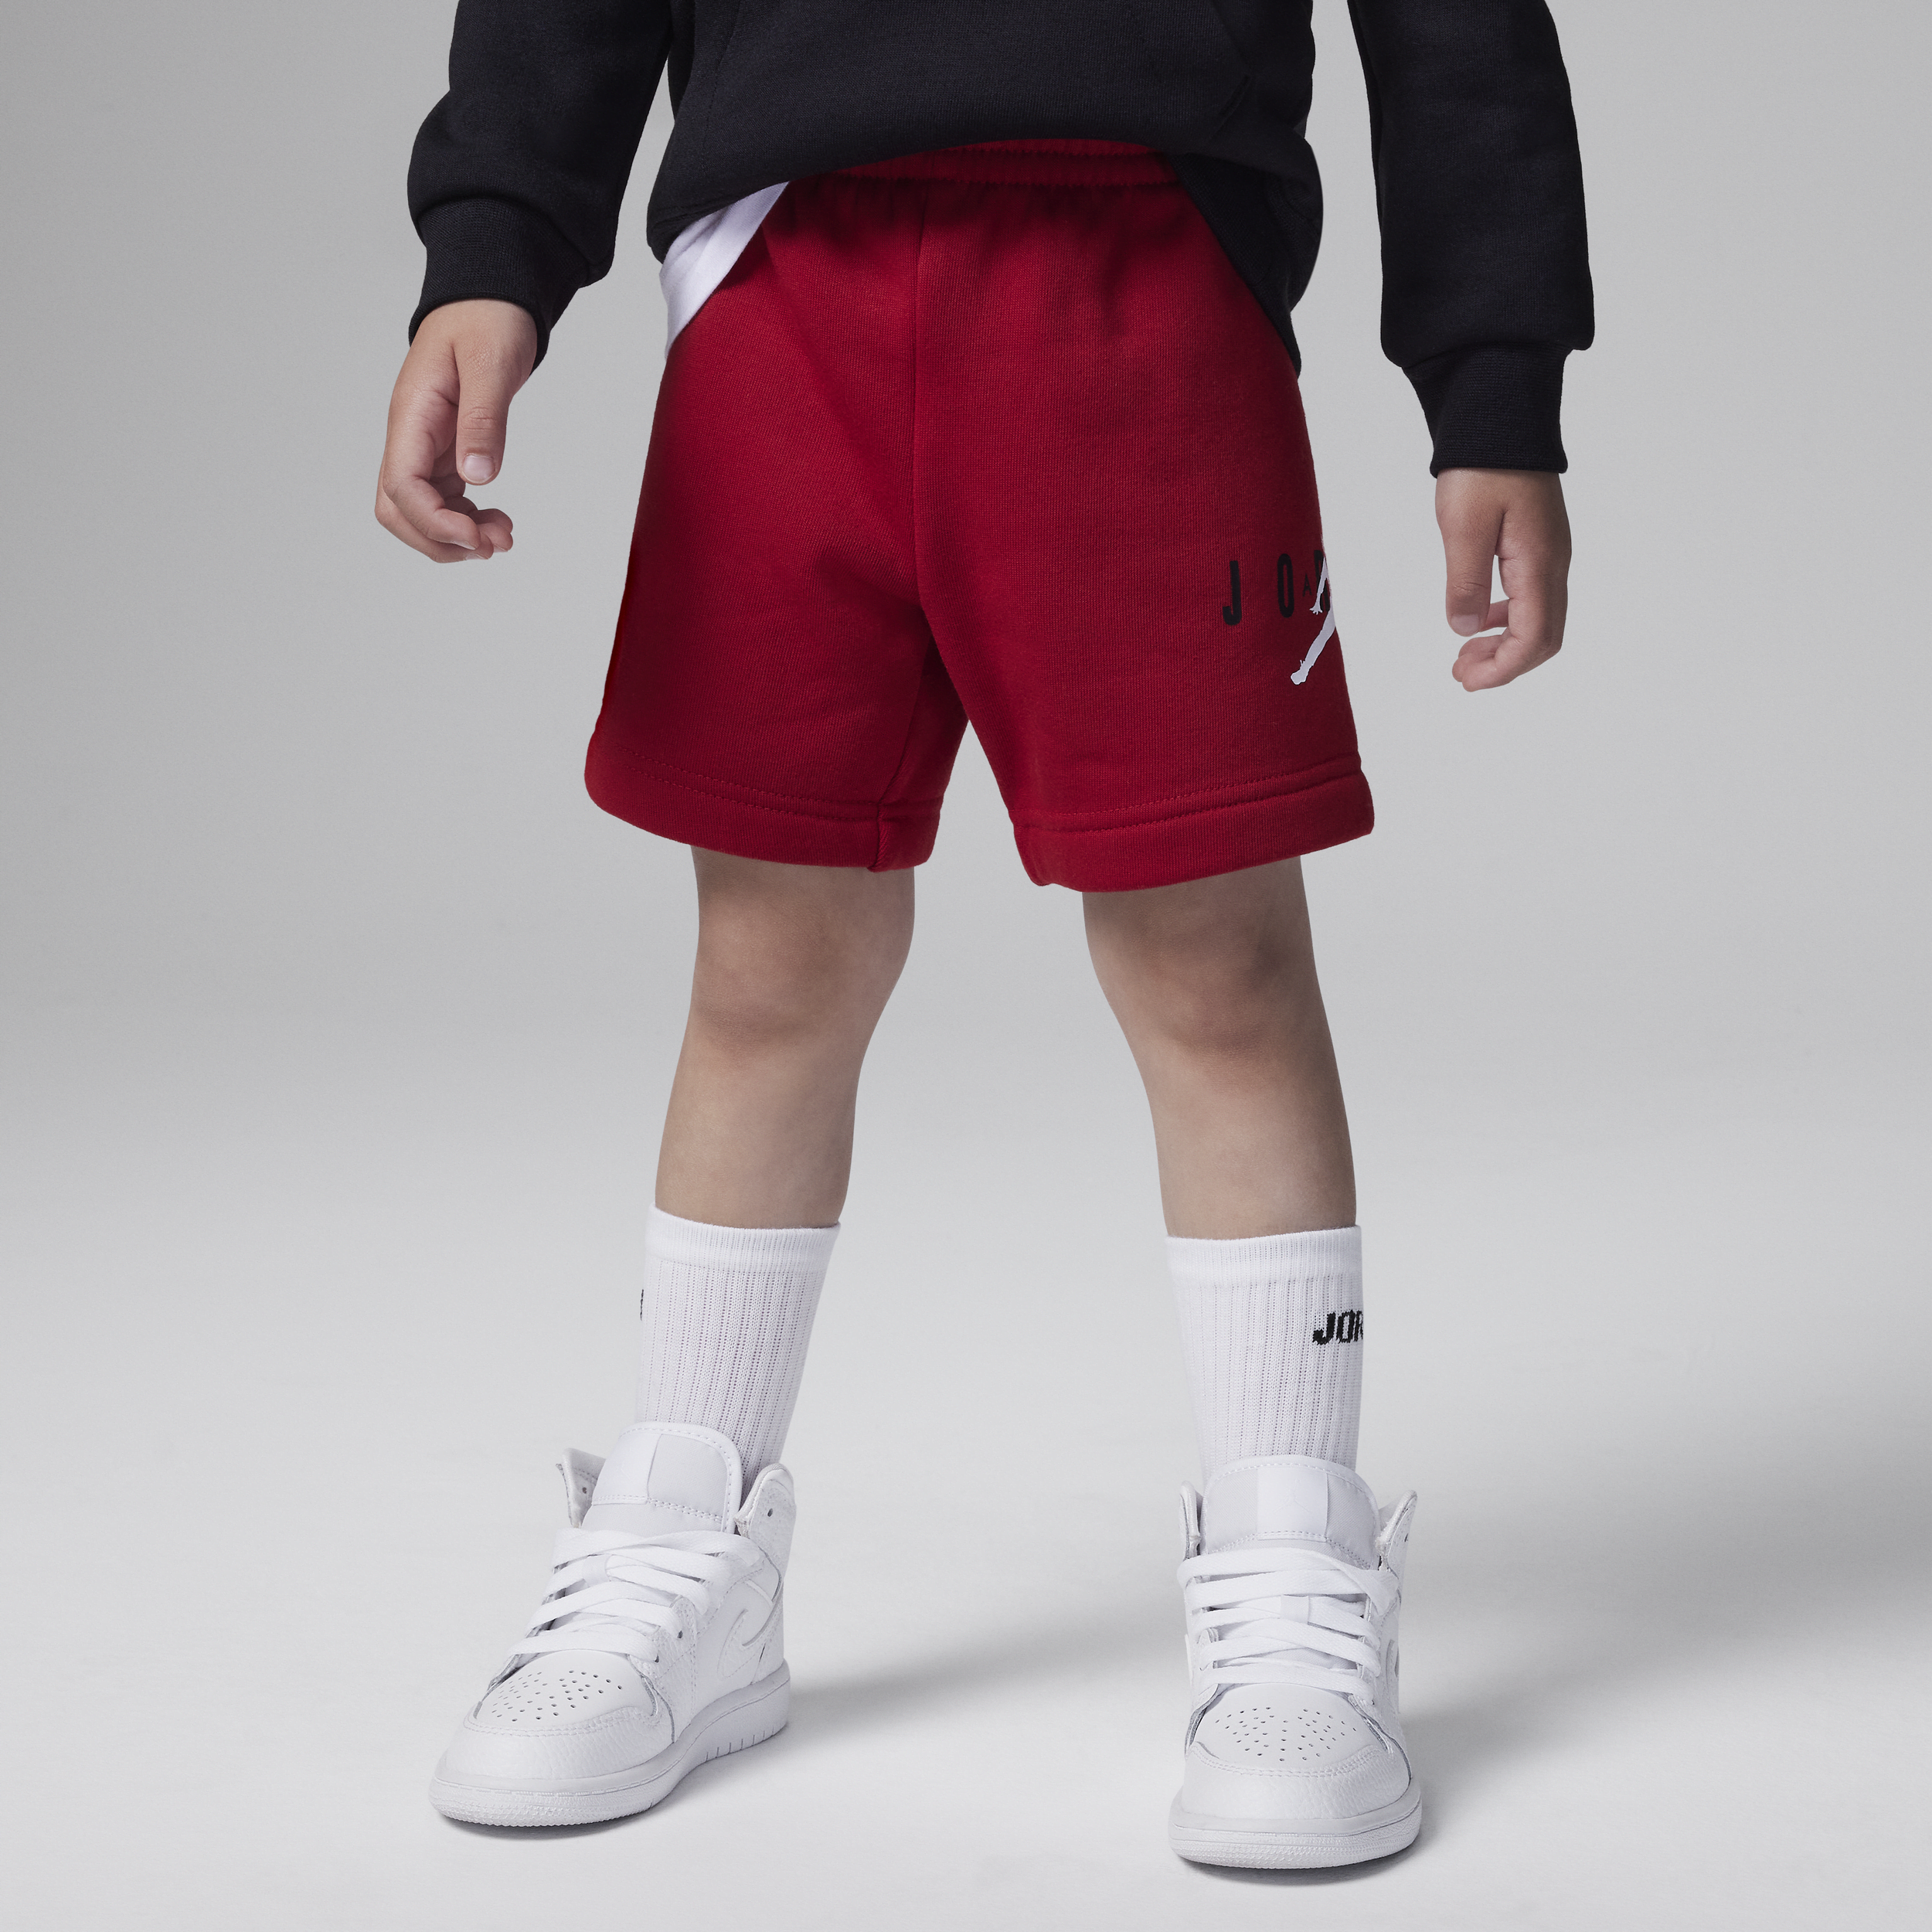 Jordan Babies' Jumpman Sustainable Shorts Toddler Shorts In Red